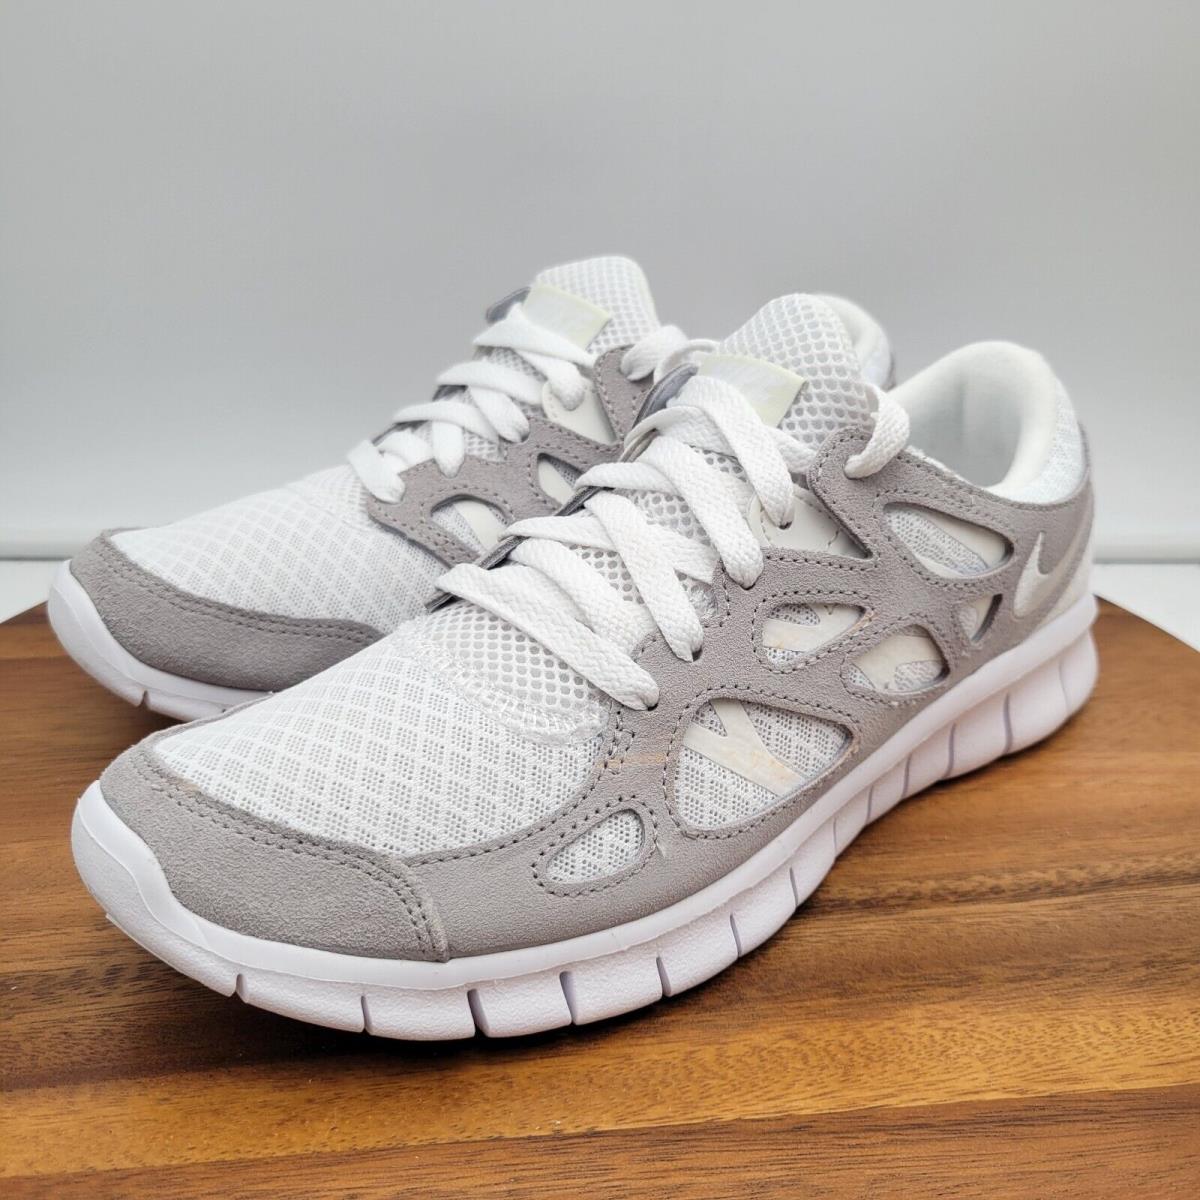 Nike shoes Free Run - White 4